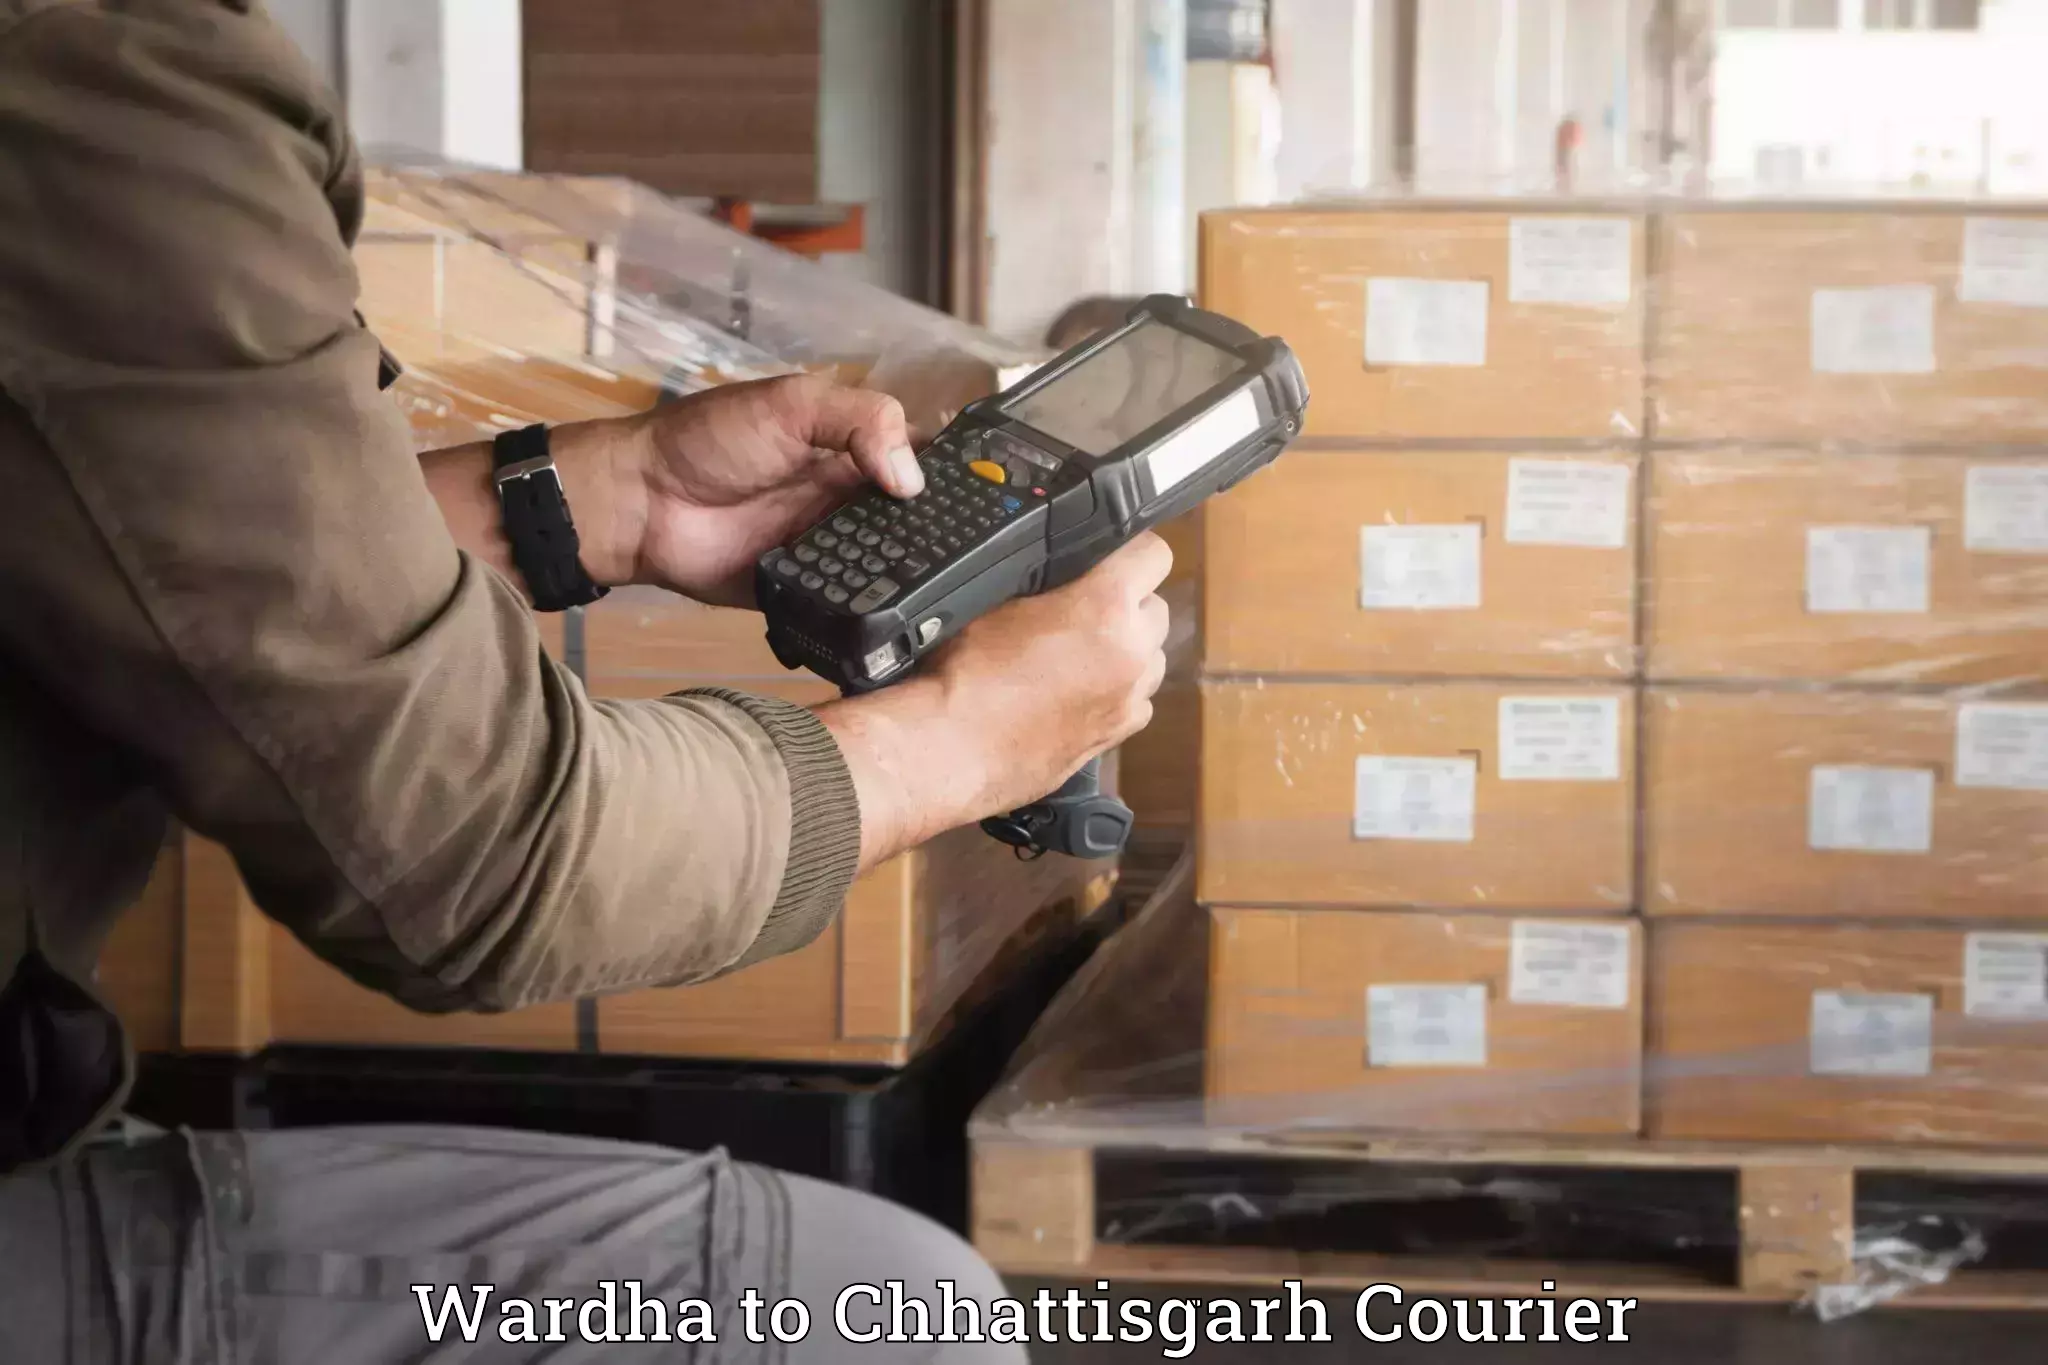 Luggage delivery network Wardha to Chhattisgarh